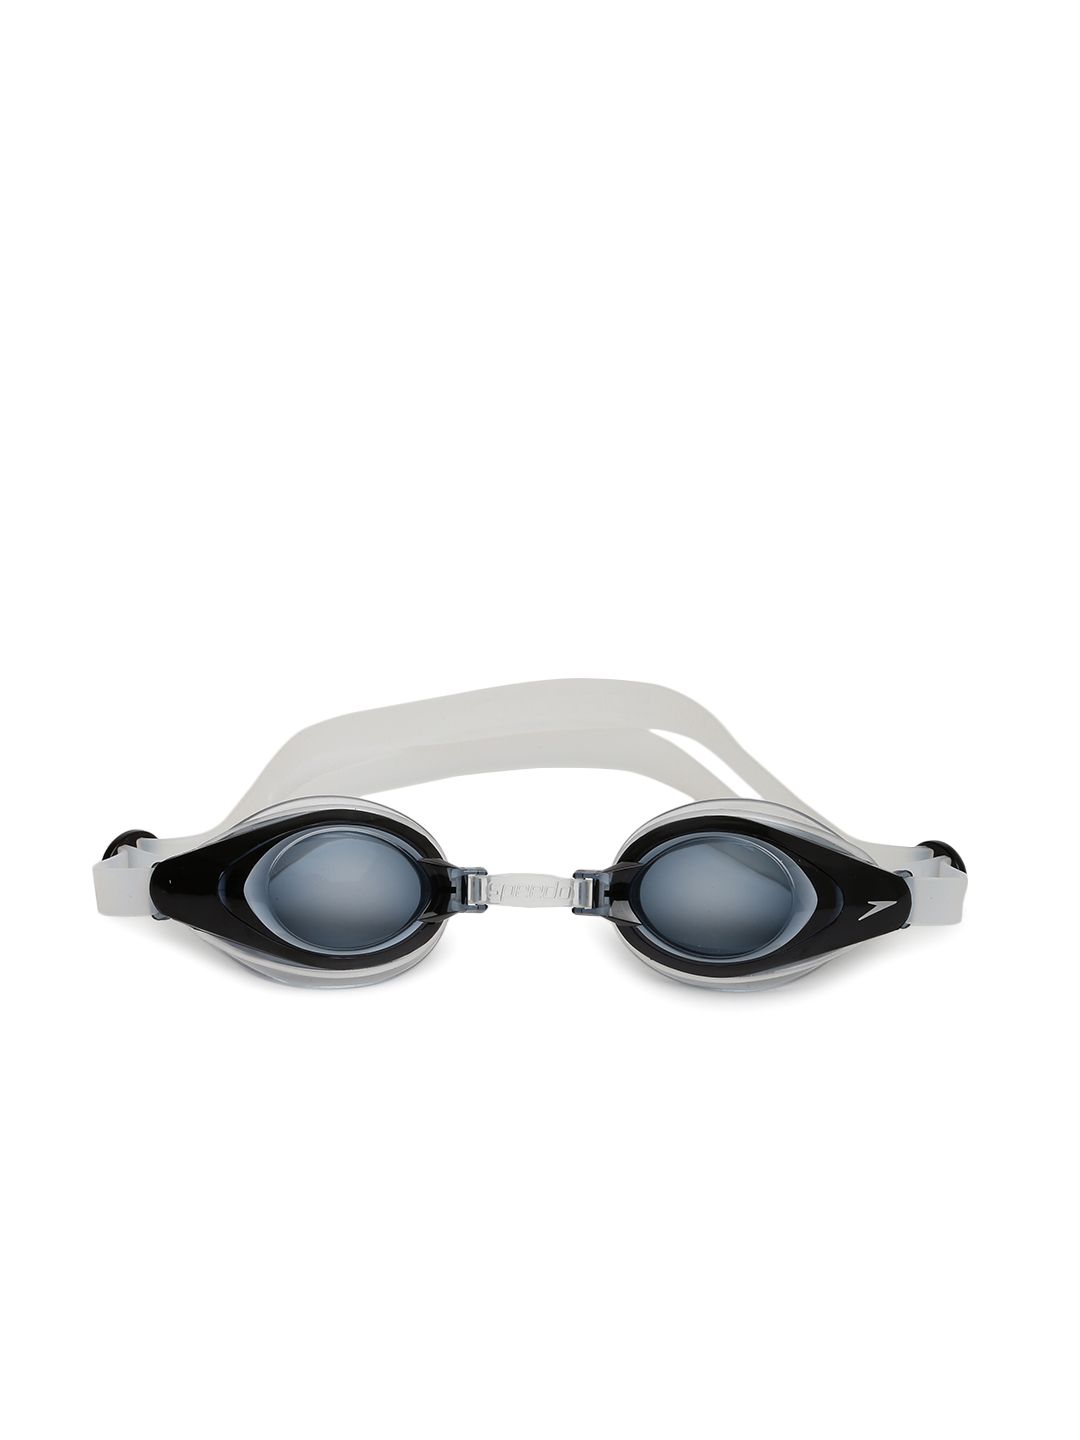 Speedo Unisex MARINER OPTICAL SS07 Swimming Goggles 8008513081 Price in India